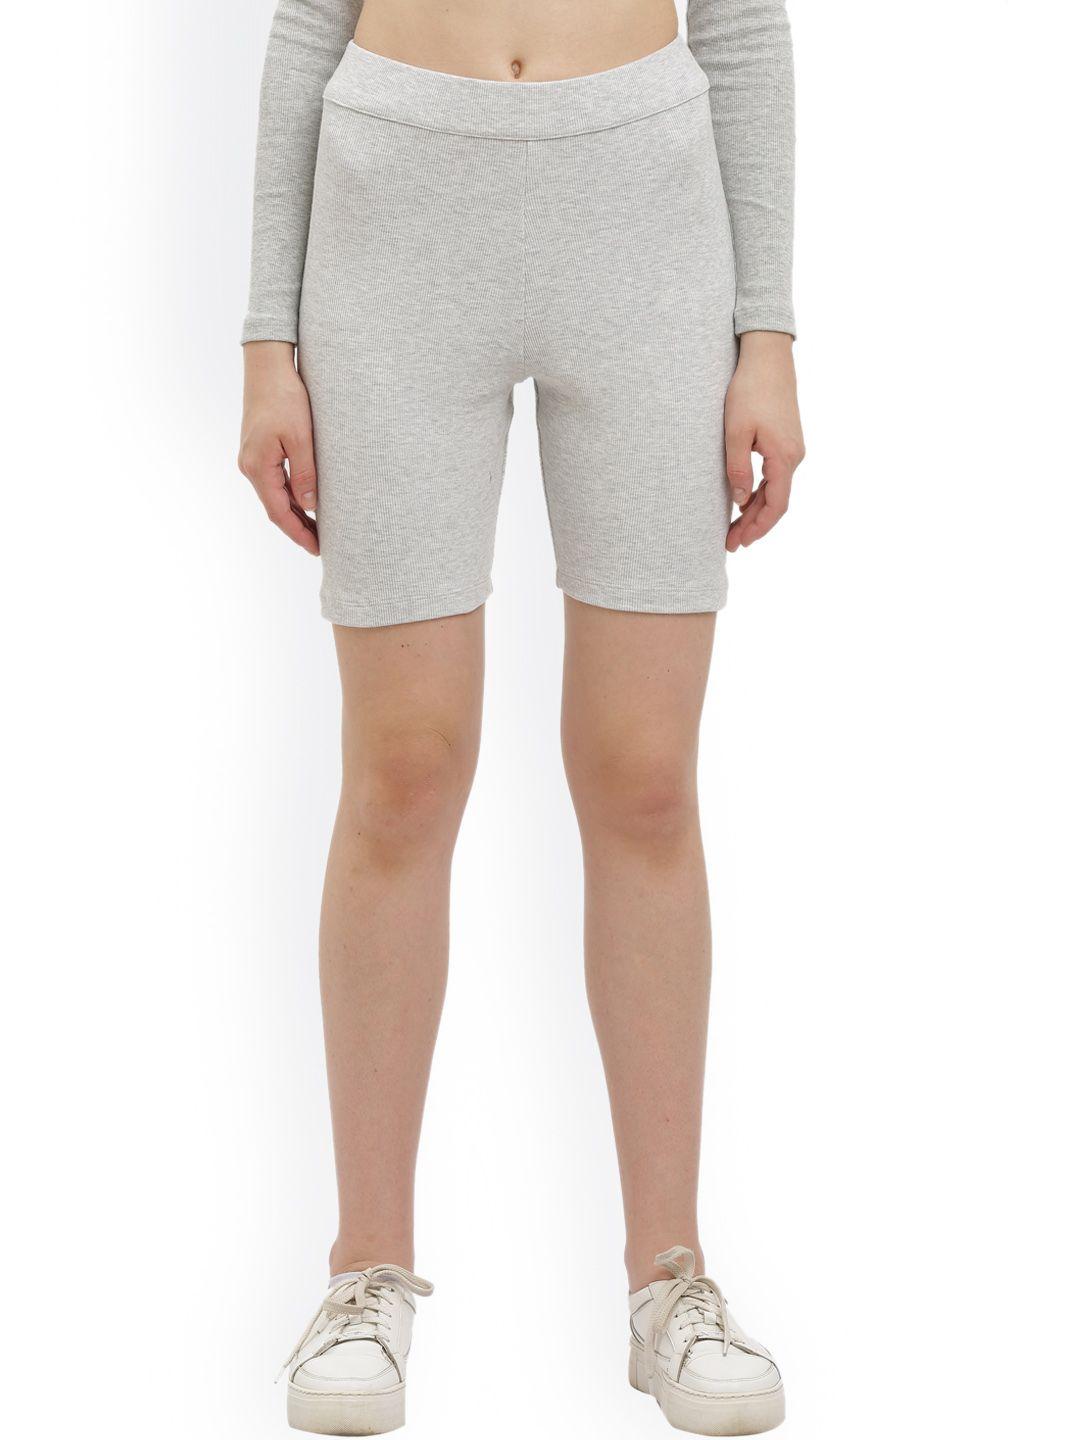 everdion women grey skinny fit yoga shorts